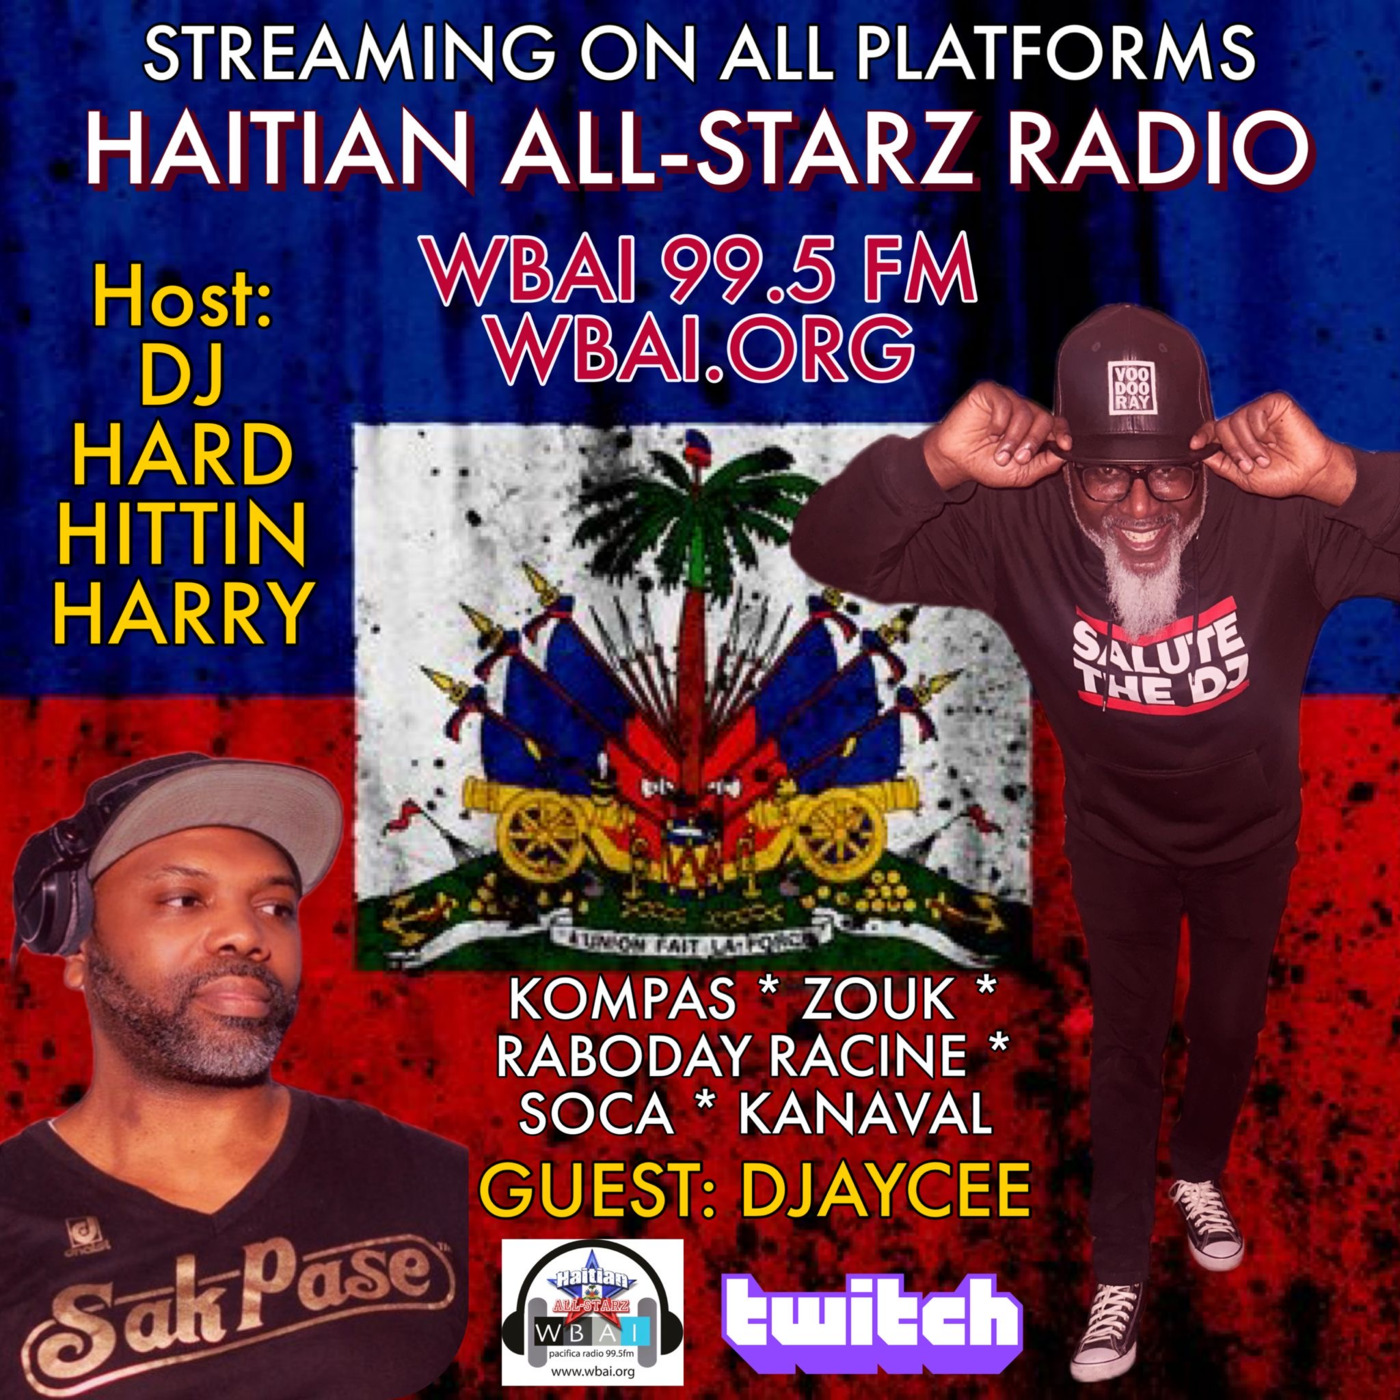 Episode 4: HAITIAN ALL-STARZ RADIO - WBAI 99.5 FM - EPISODE #226 - HARD HITTIN HARRY & DJayCee